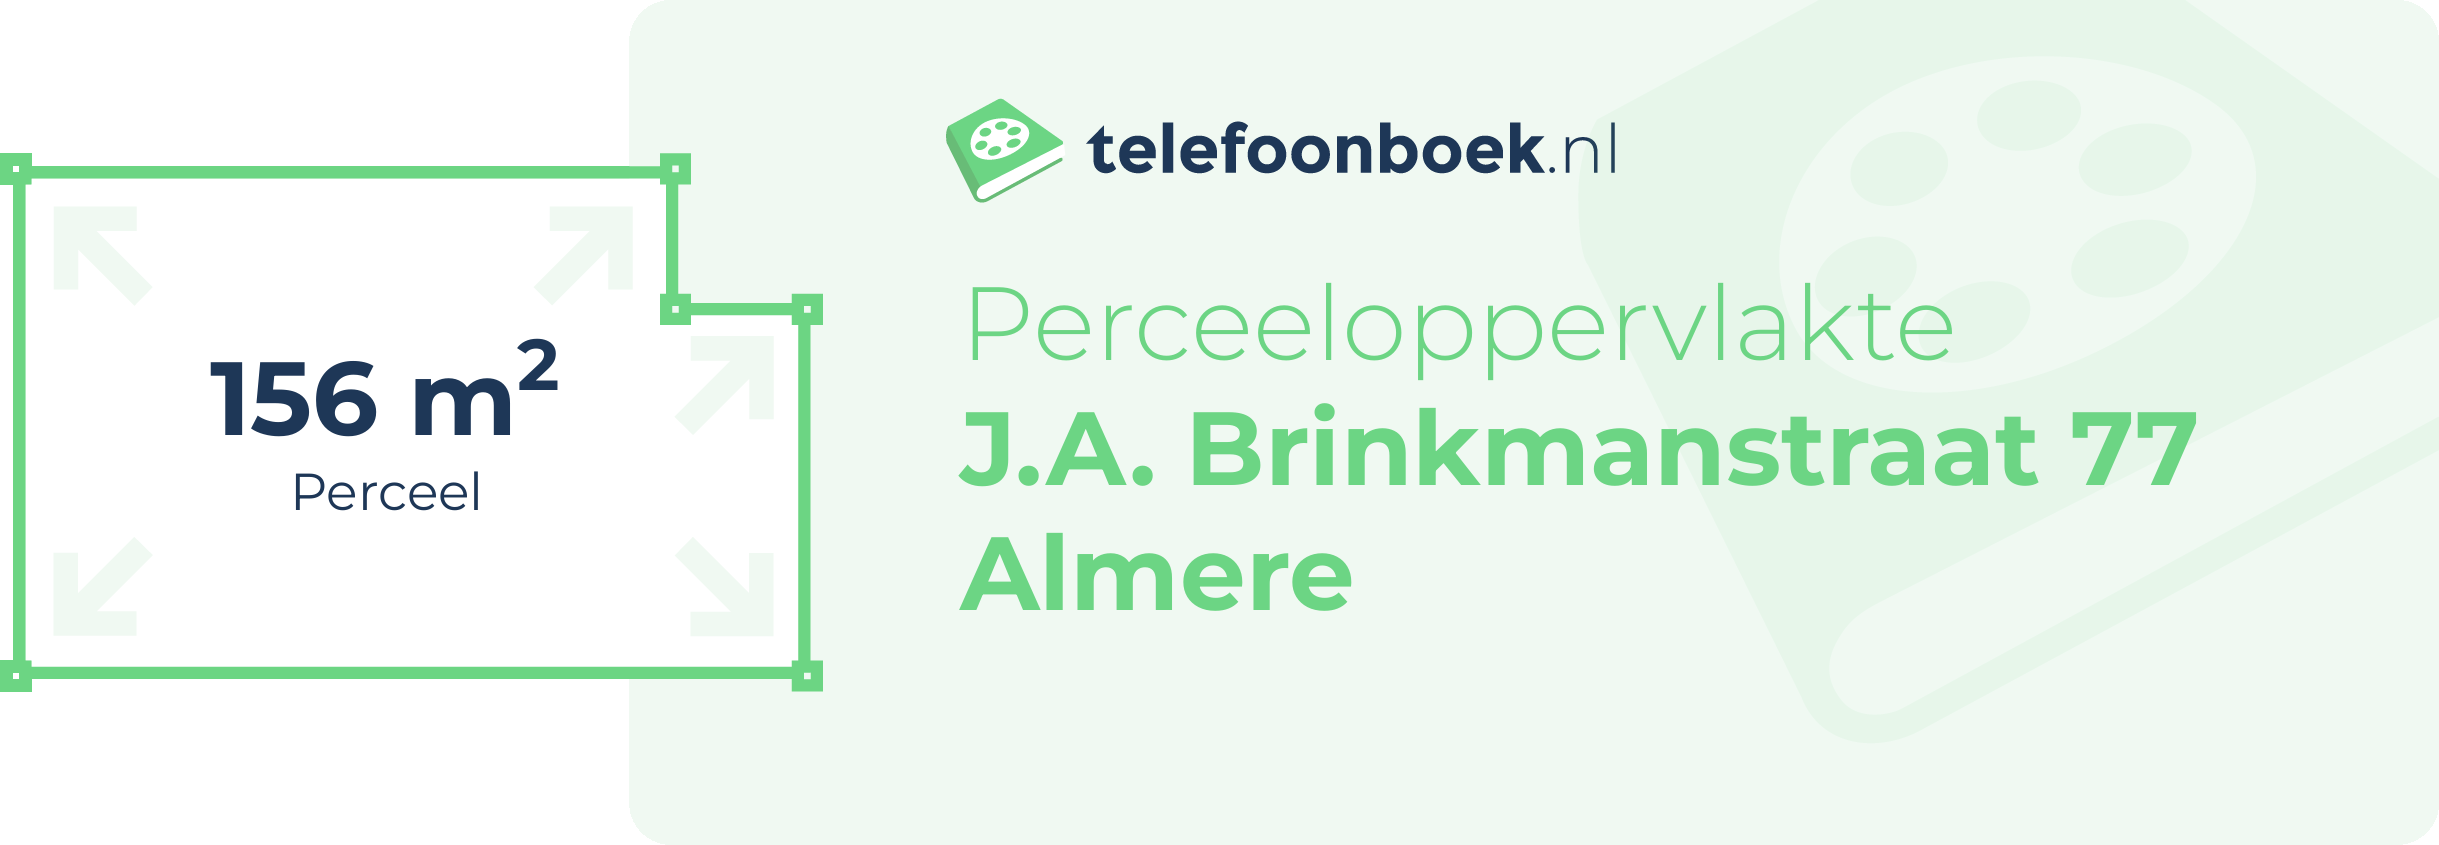 Perceeloppervlakte J.A. Brinkmanstraat 77 Almere